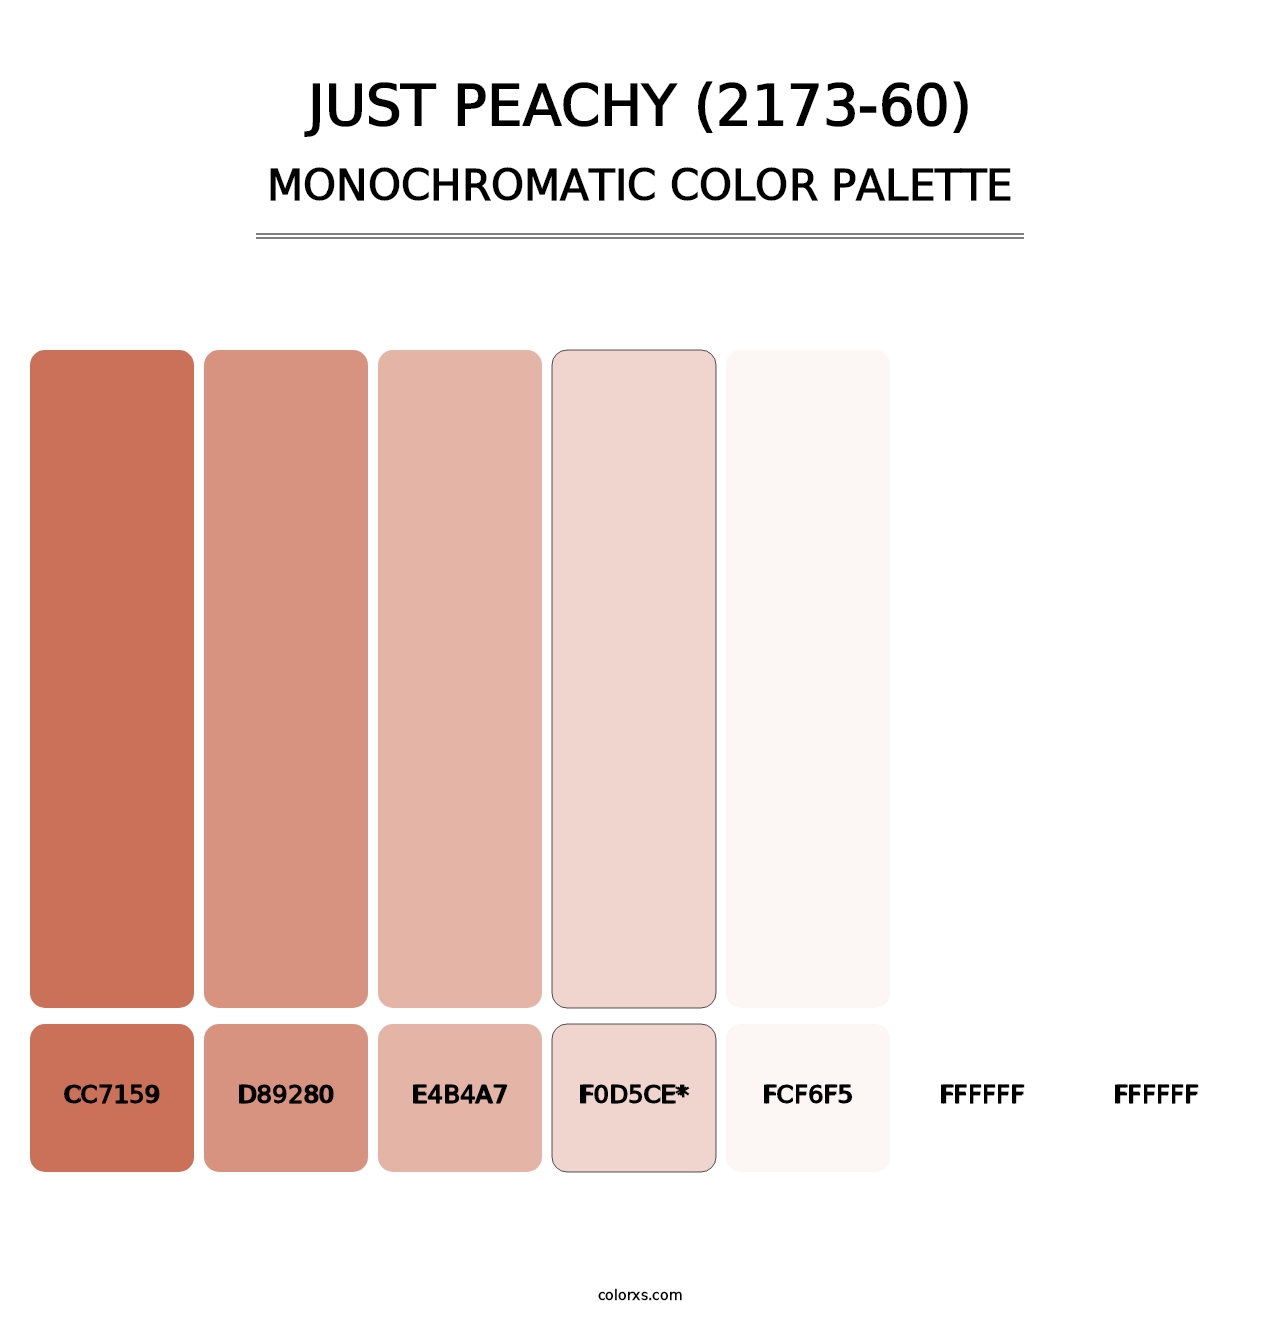 Just Peachy (2173-60) - Monochromatic Color Palette